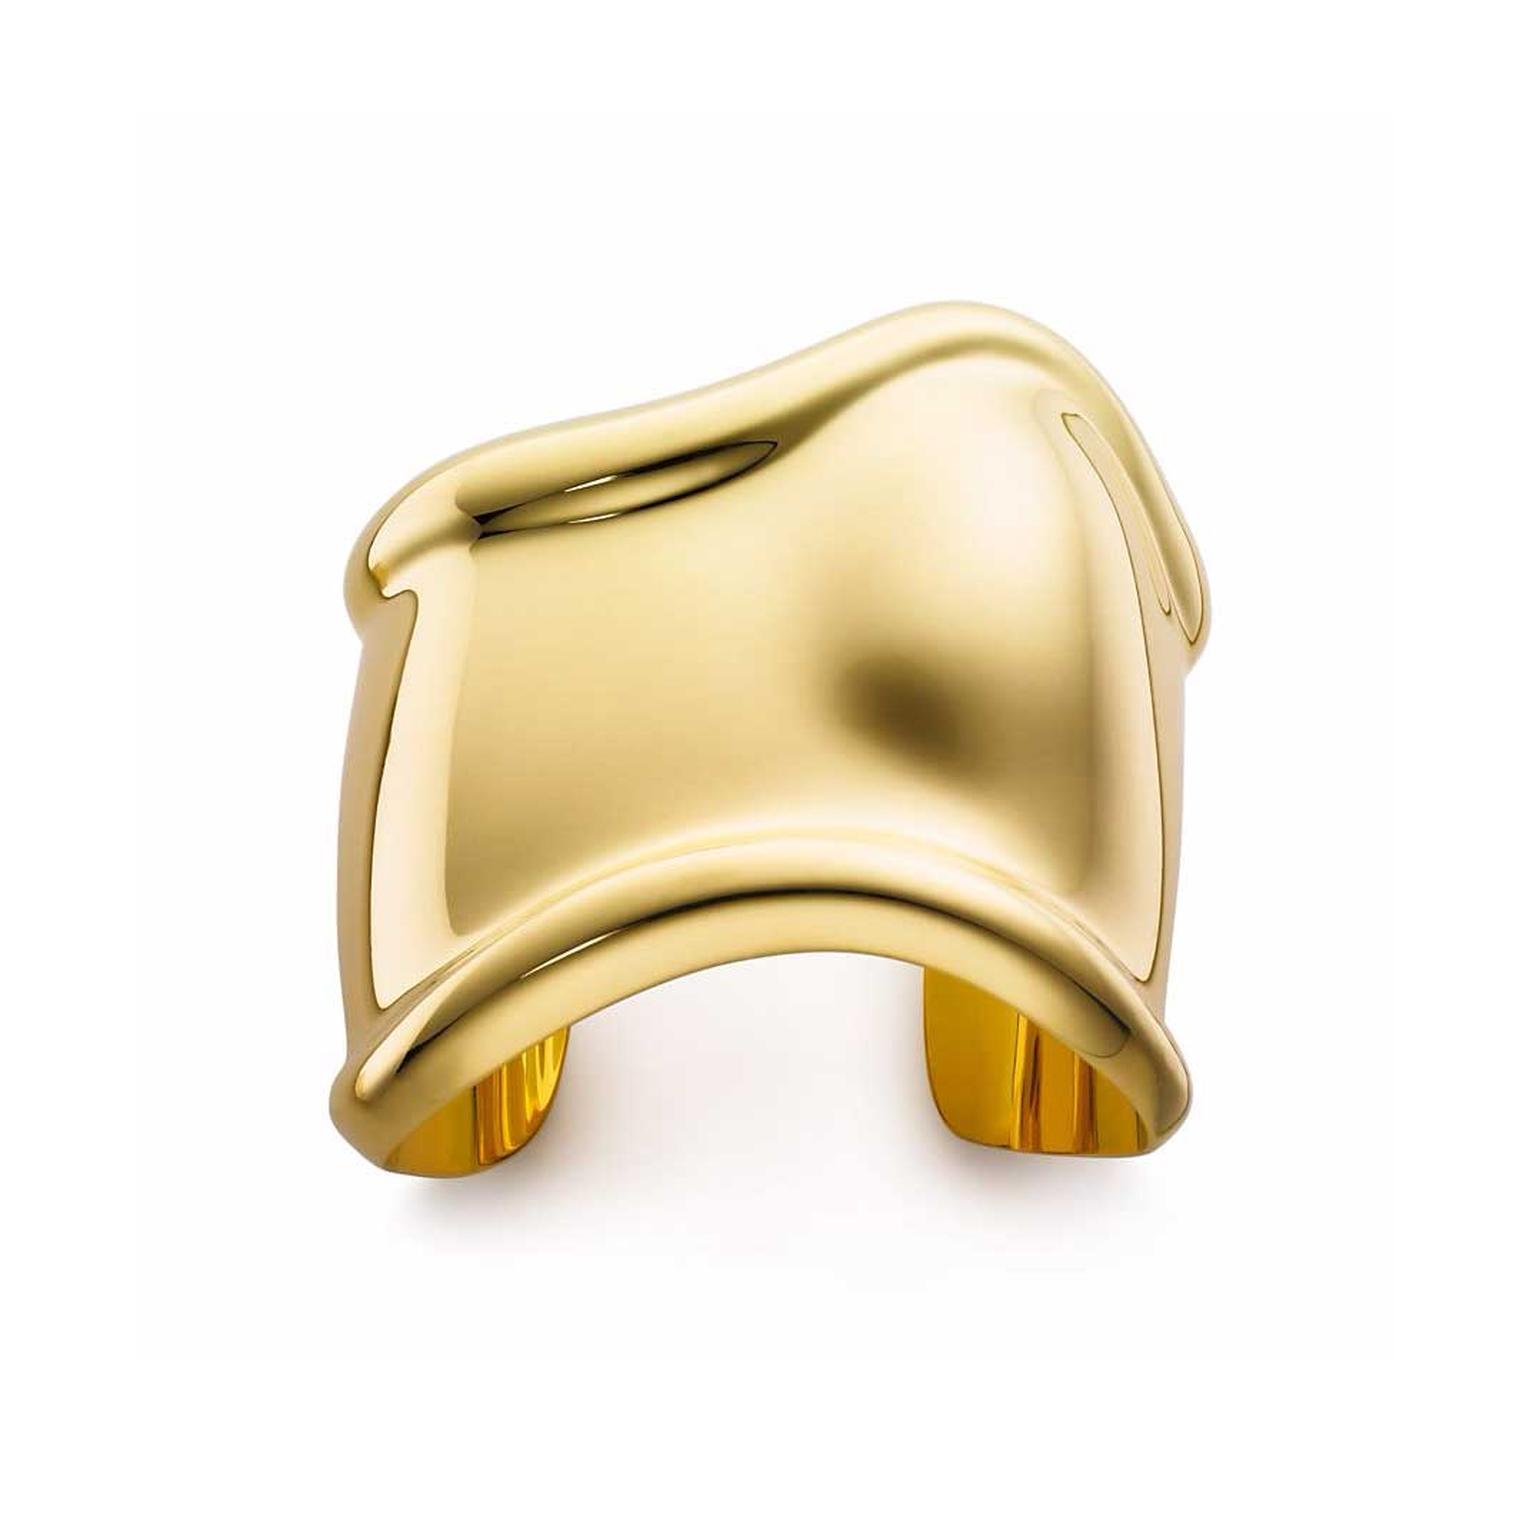 Elsa Peretti for Tiffany yellow gold Bone cuff